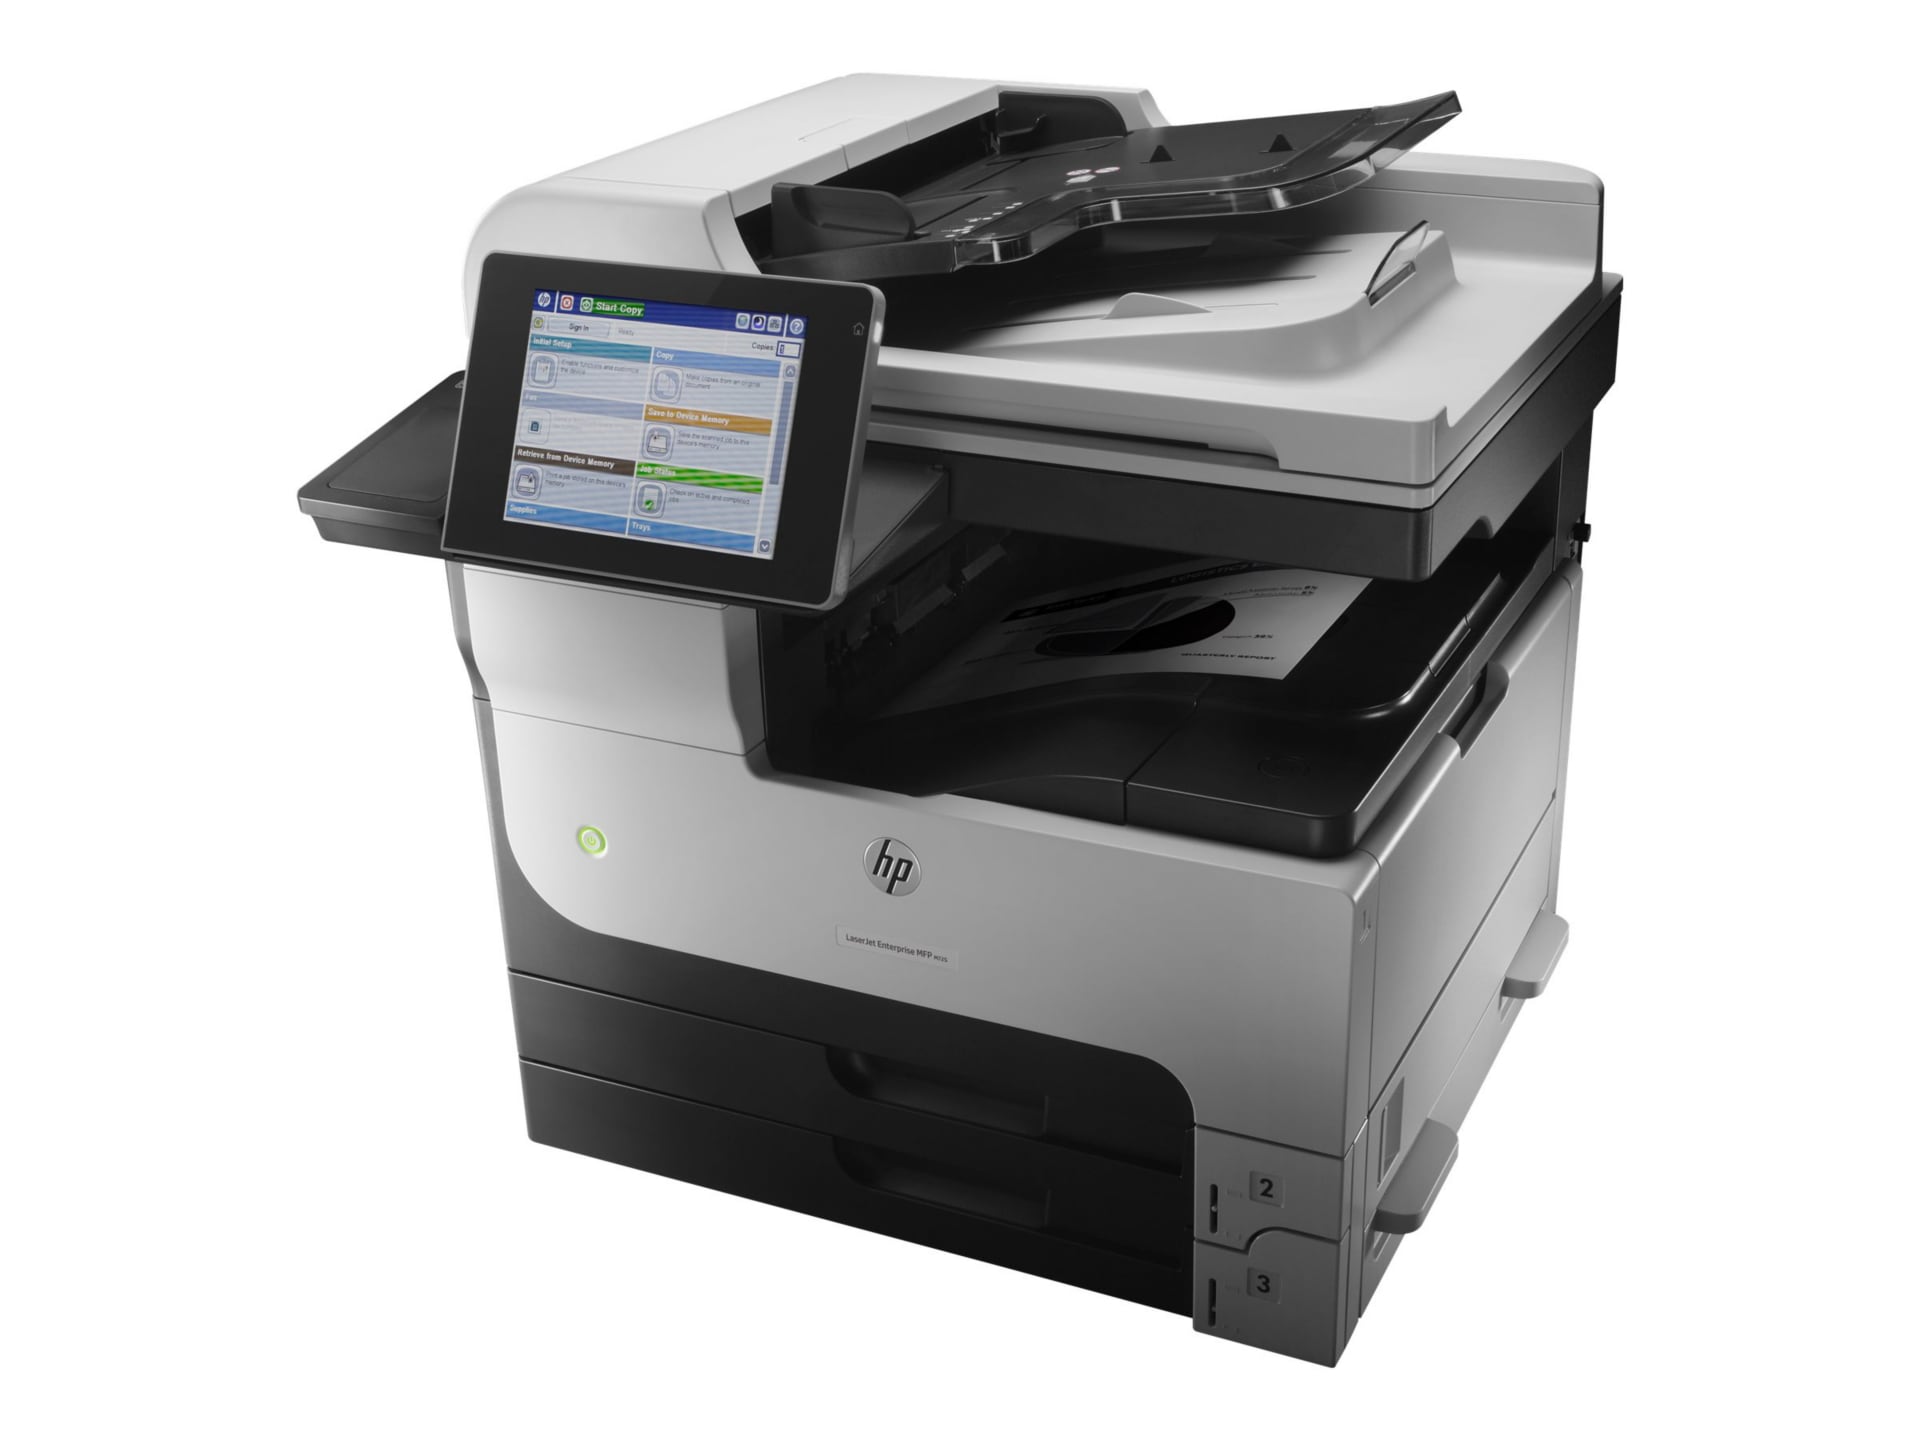 HP LaserJet Enterprise MFP M725dn - multifunction - B/W - CF066A#BGJ - All-in-One Printers - CDW.com